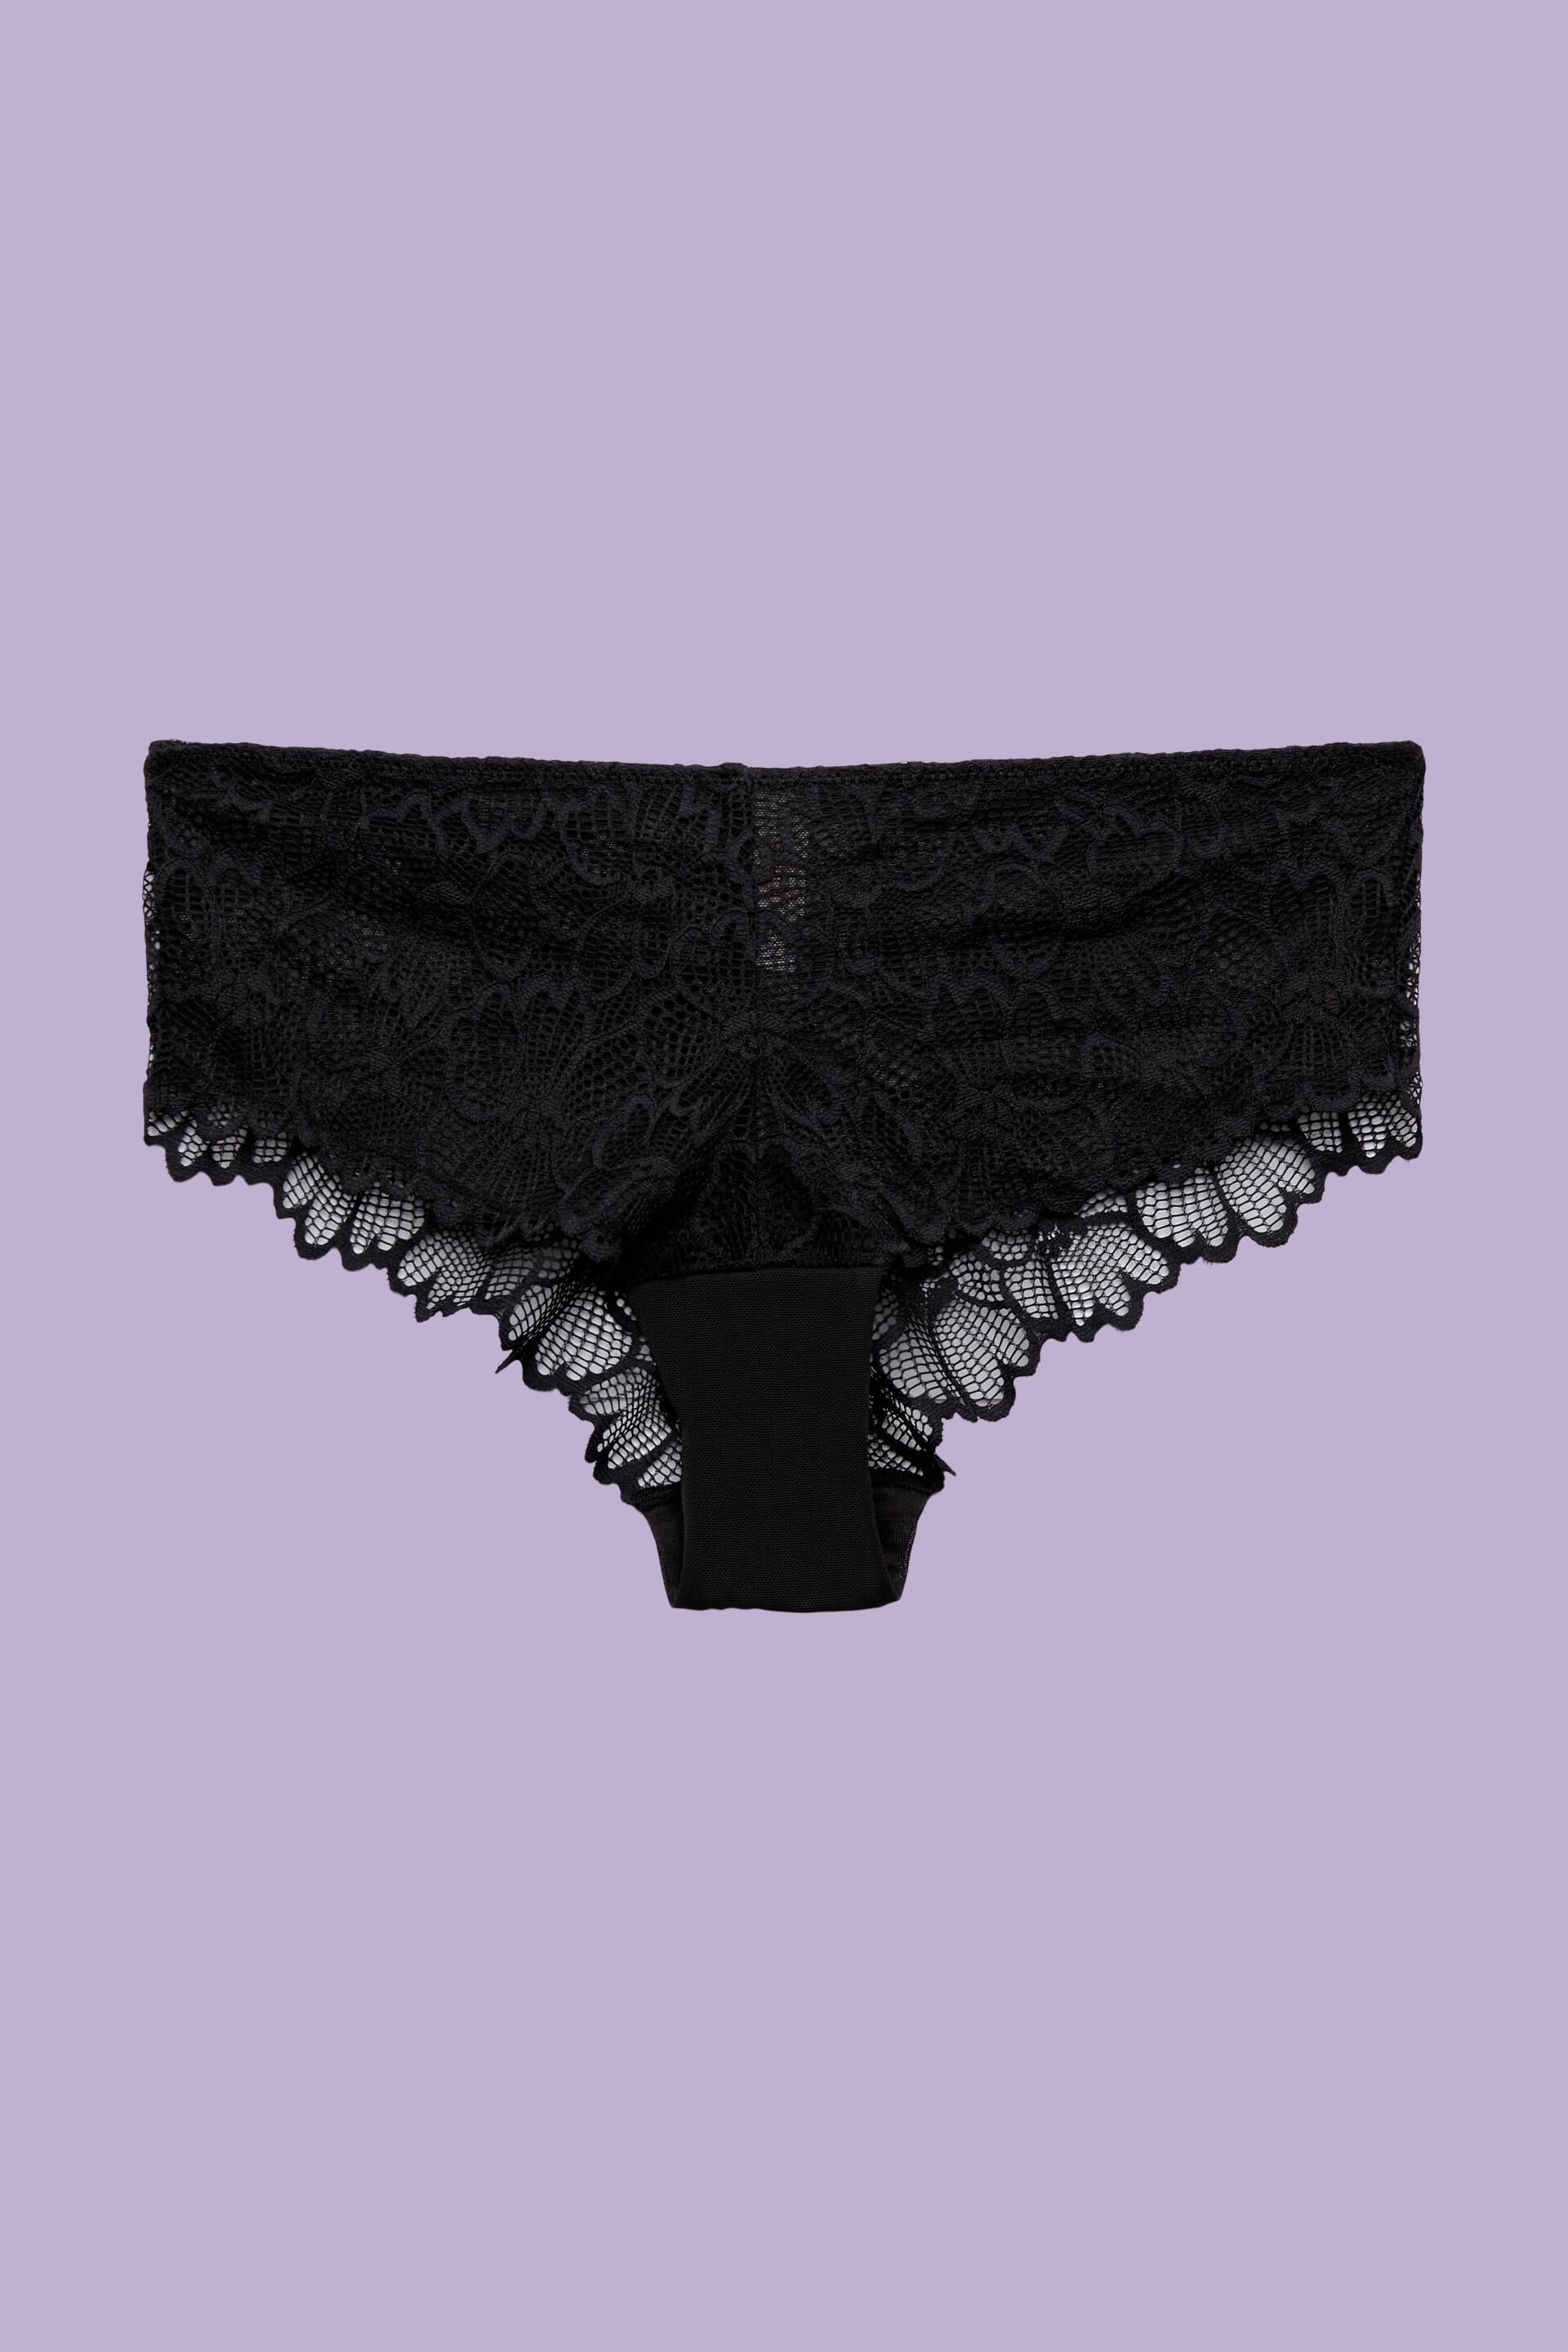 Vanity Fair Panties and underwear for Women, Online Sale up to 64% off